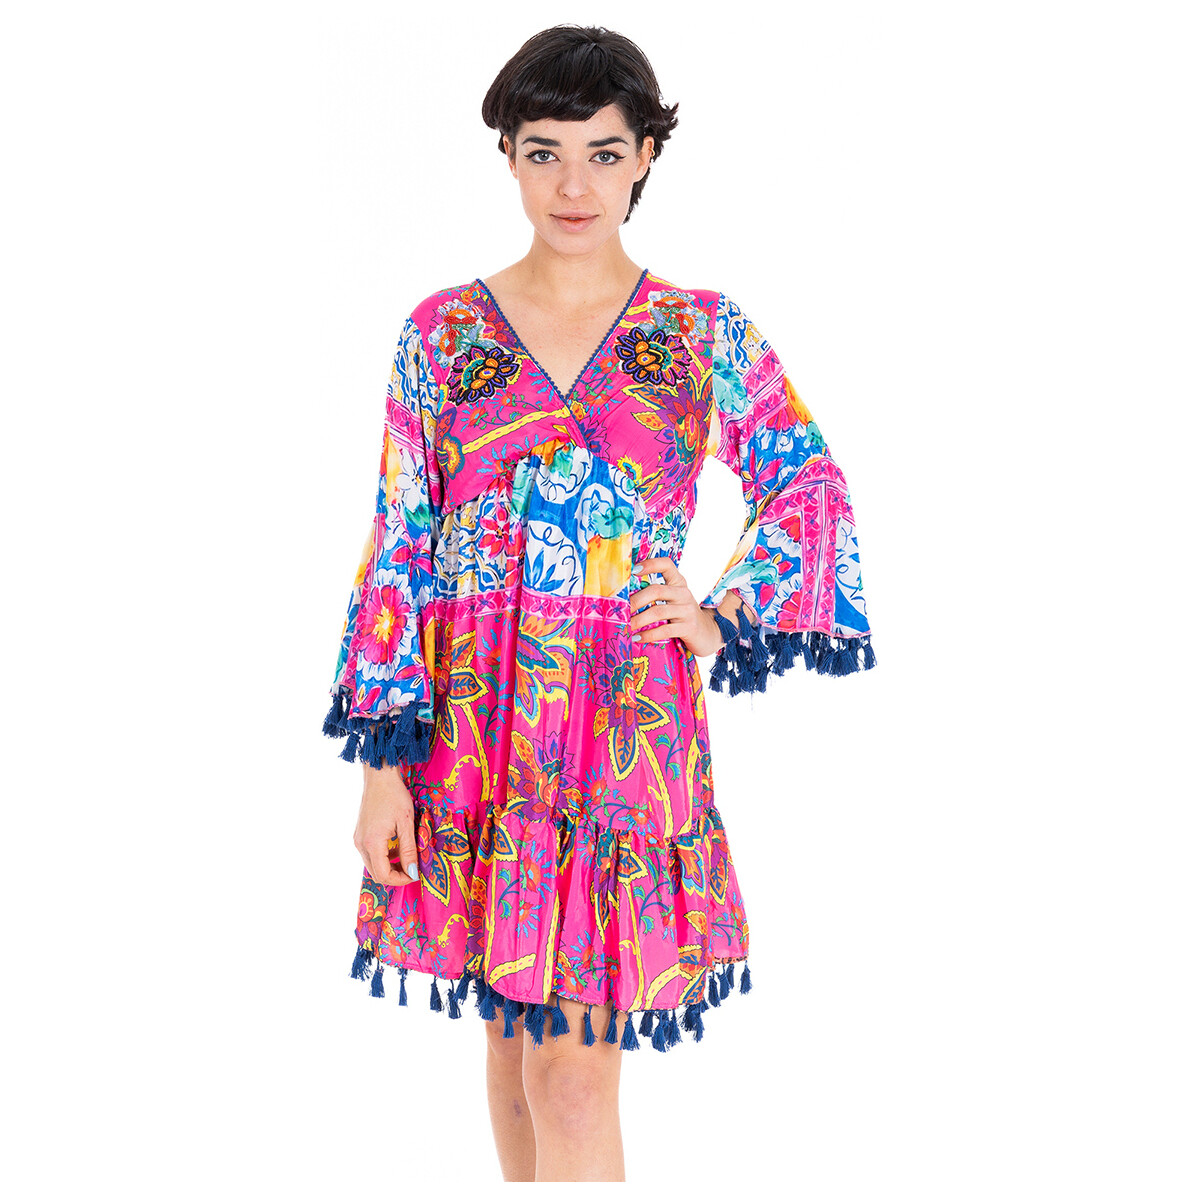 Oblečenie Žena Krátke šaty Isla Bonita By Sigris Krátke Šaty Ružová